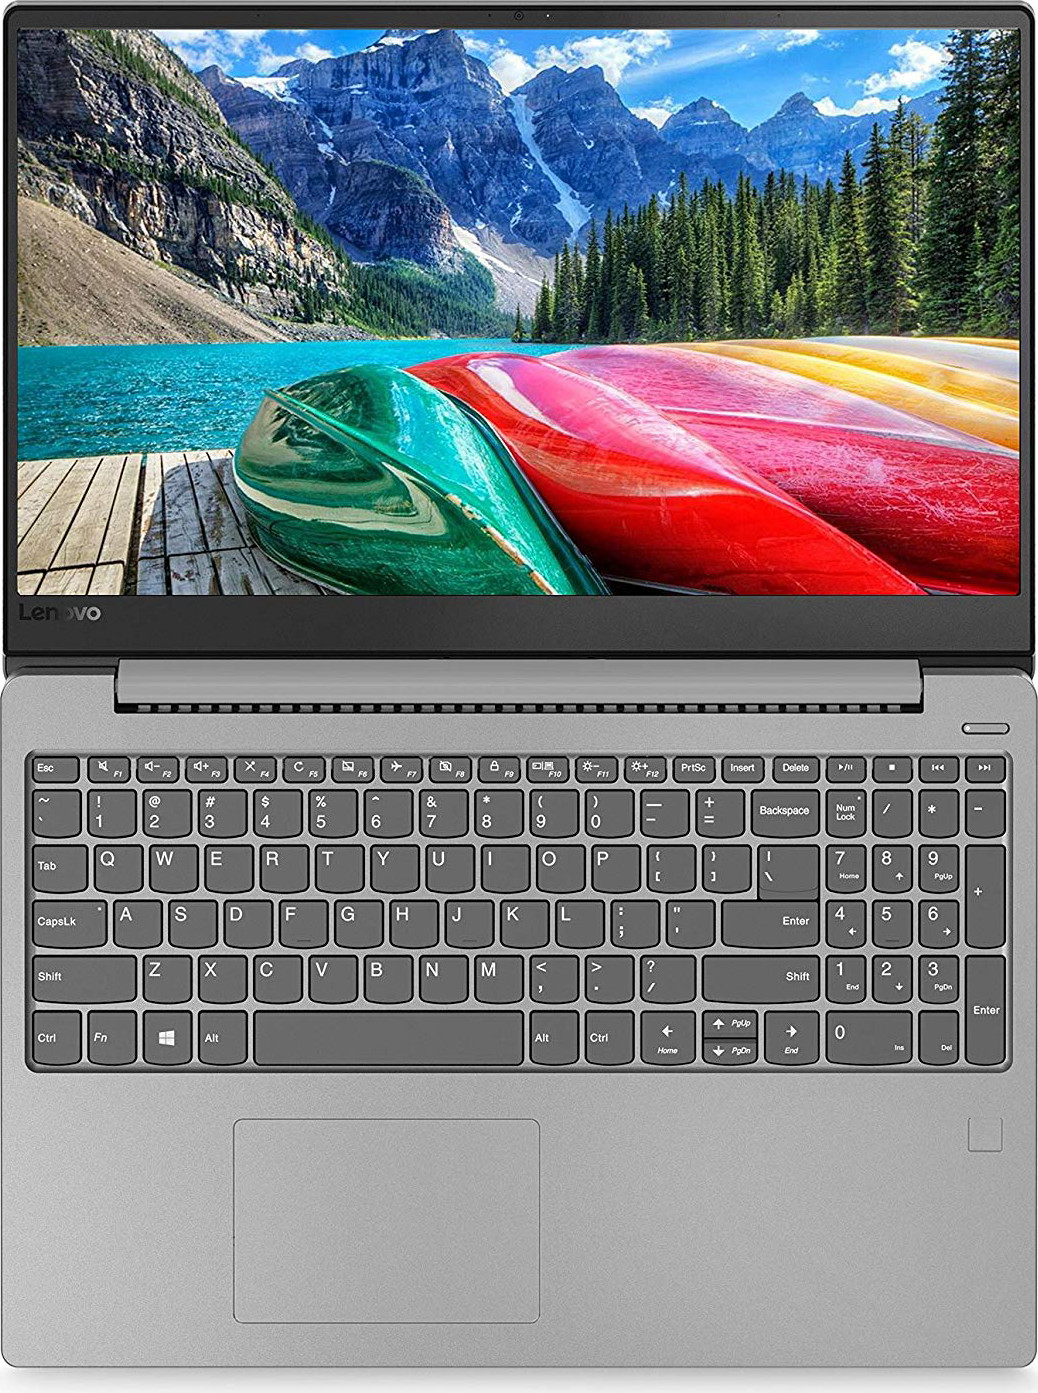 Lenovo Ideapad 330S 15.6" Laptop, Windows 10, Intel Core i7-8550U Quad-Core Processor, 4GB DDR4 RAM, 16GB Intel Optane Memory, 1TB Hard Drive, Platinum Grey 81F50048US